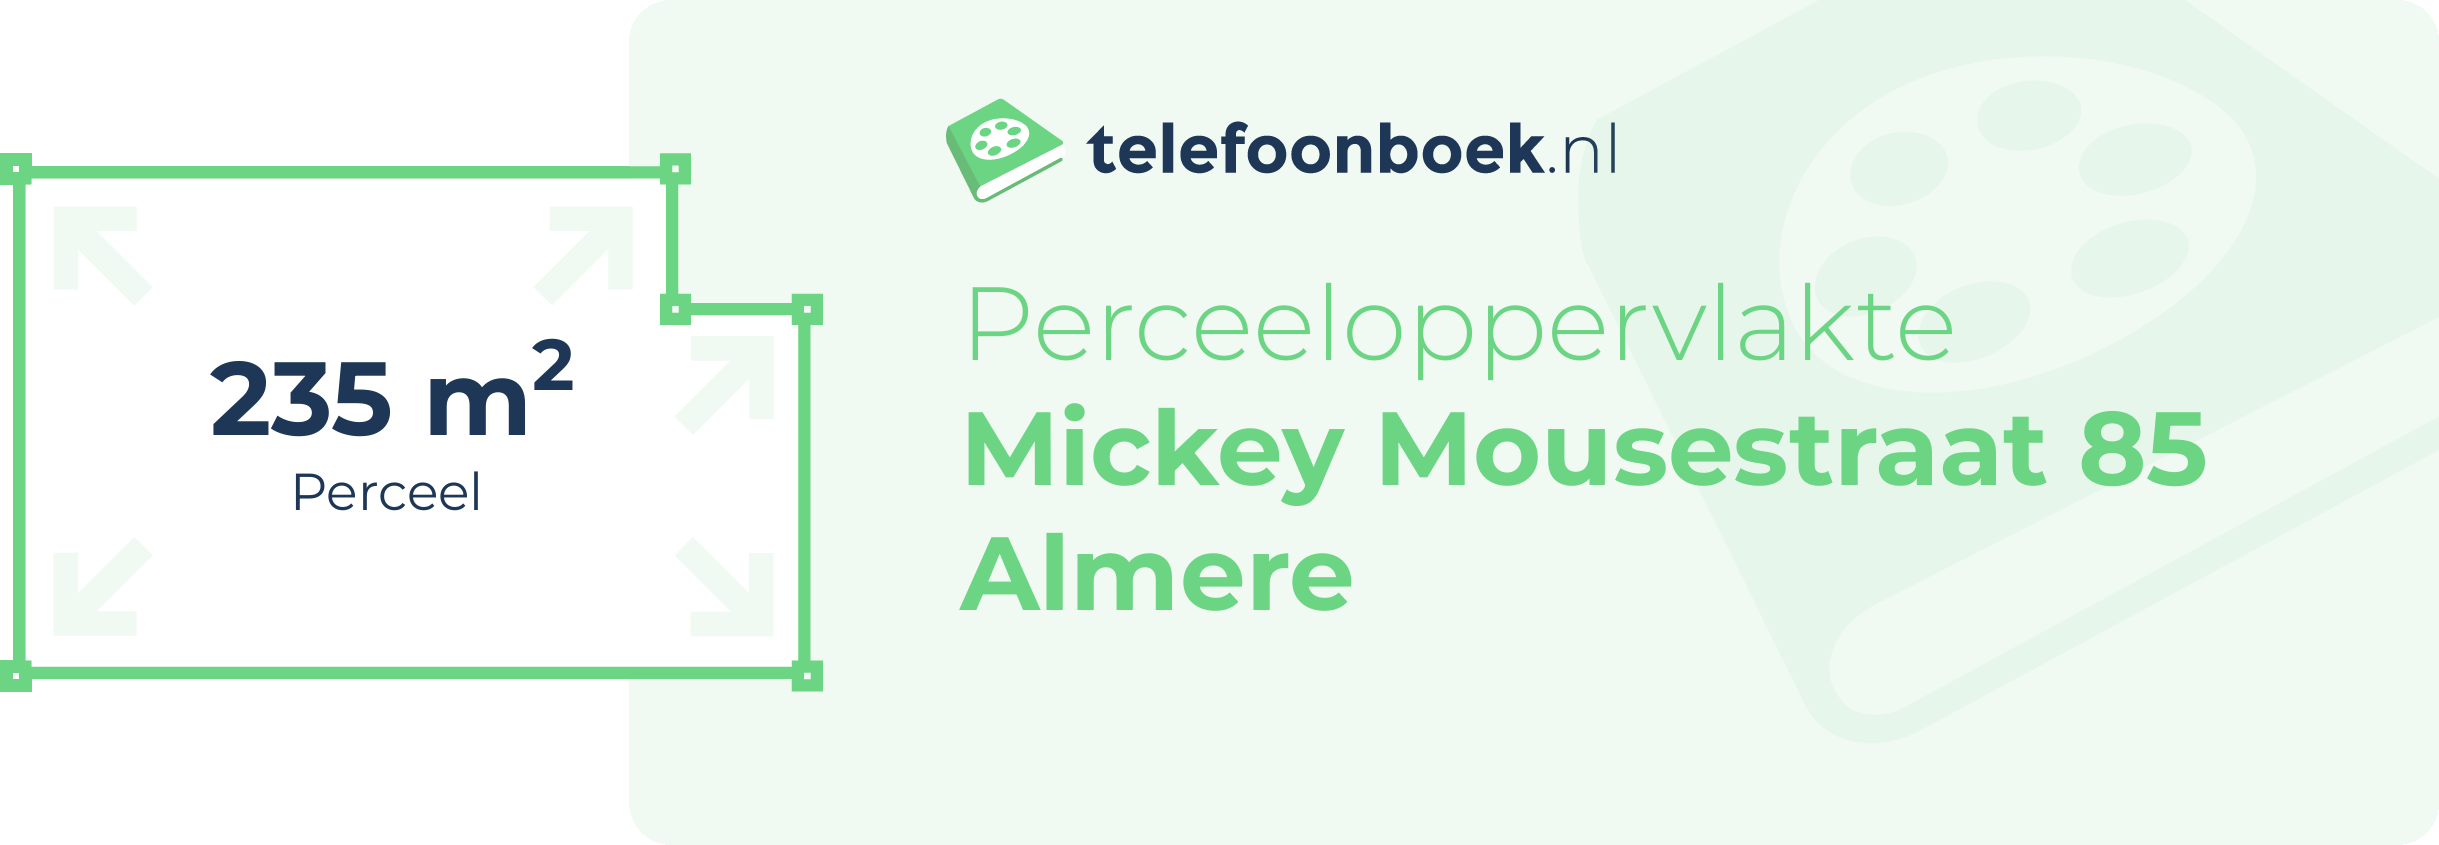 Perceeloppervlakte Mickey Mousestraat 85 Almere